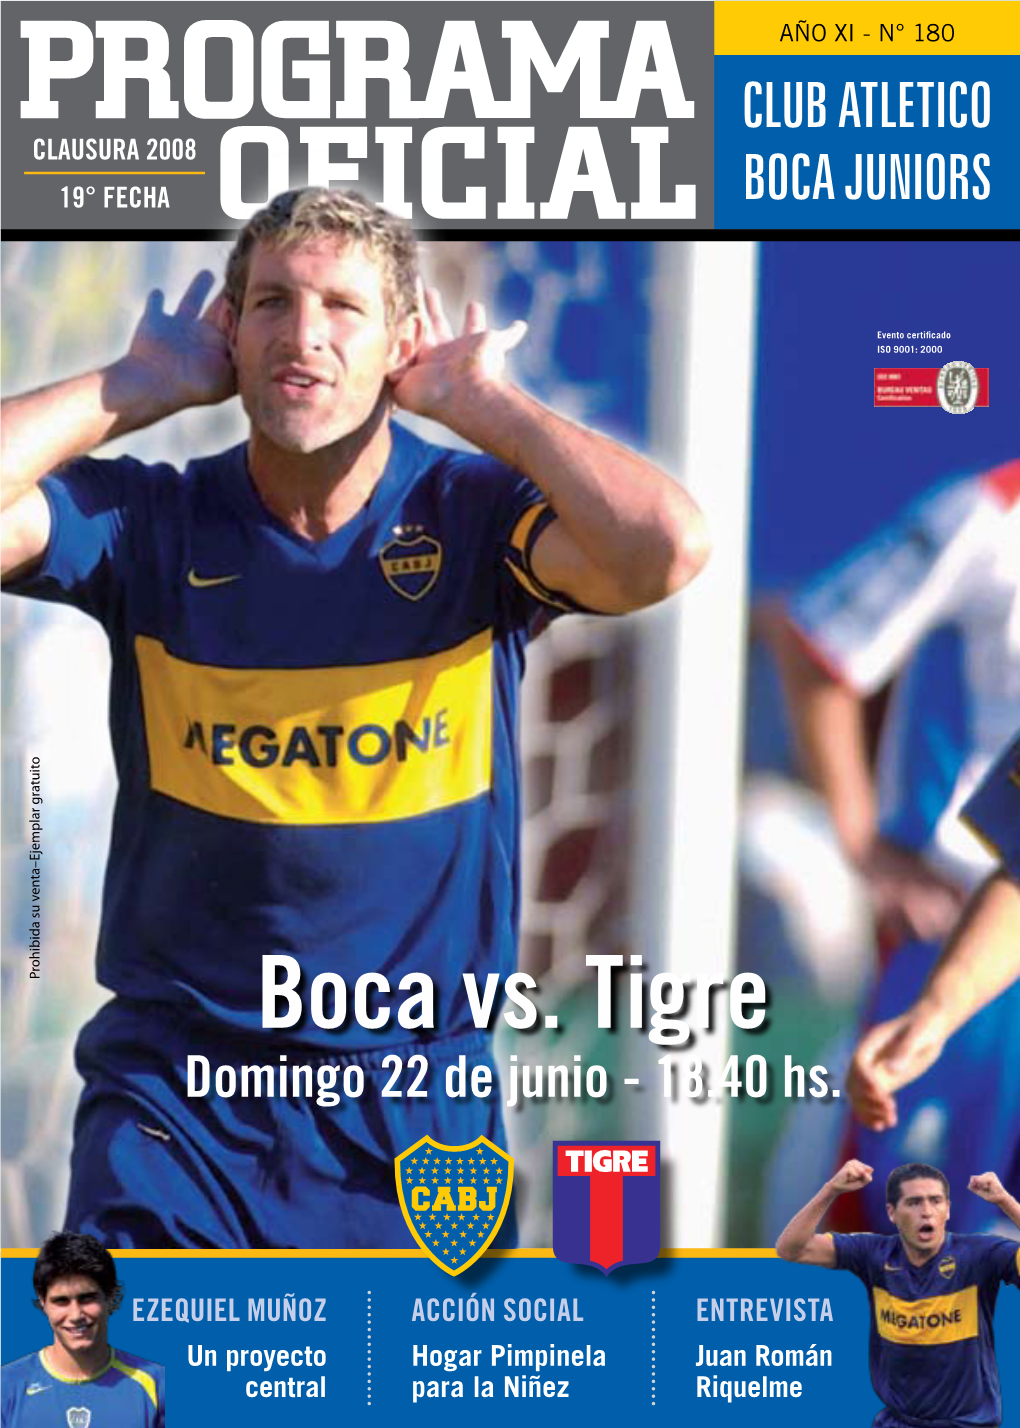 Programa Club Atletico Clausura 2008 Boca Juniors 19° Fecha Oficial